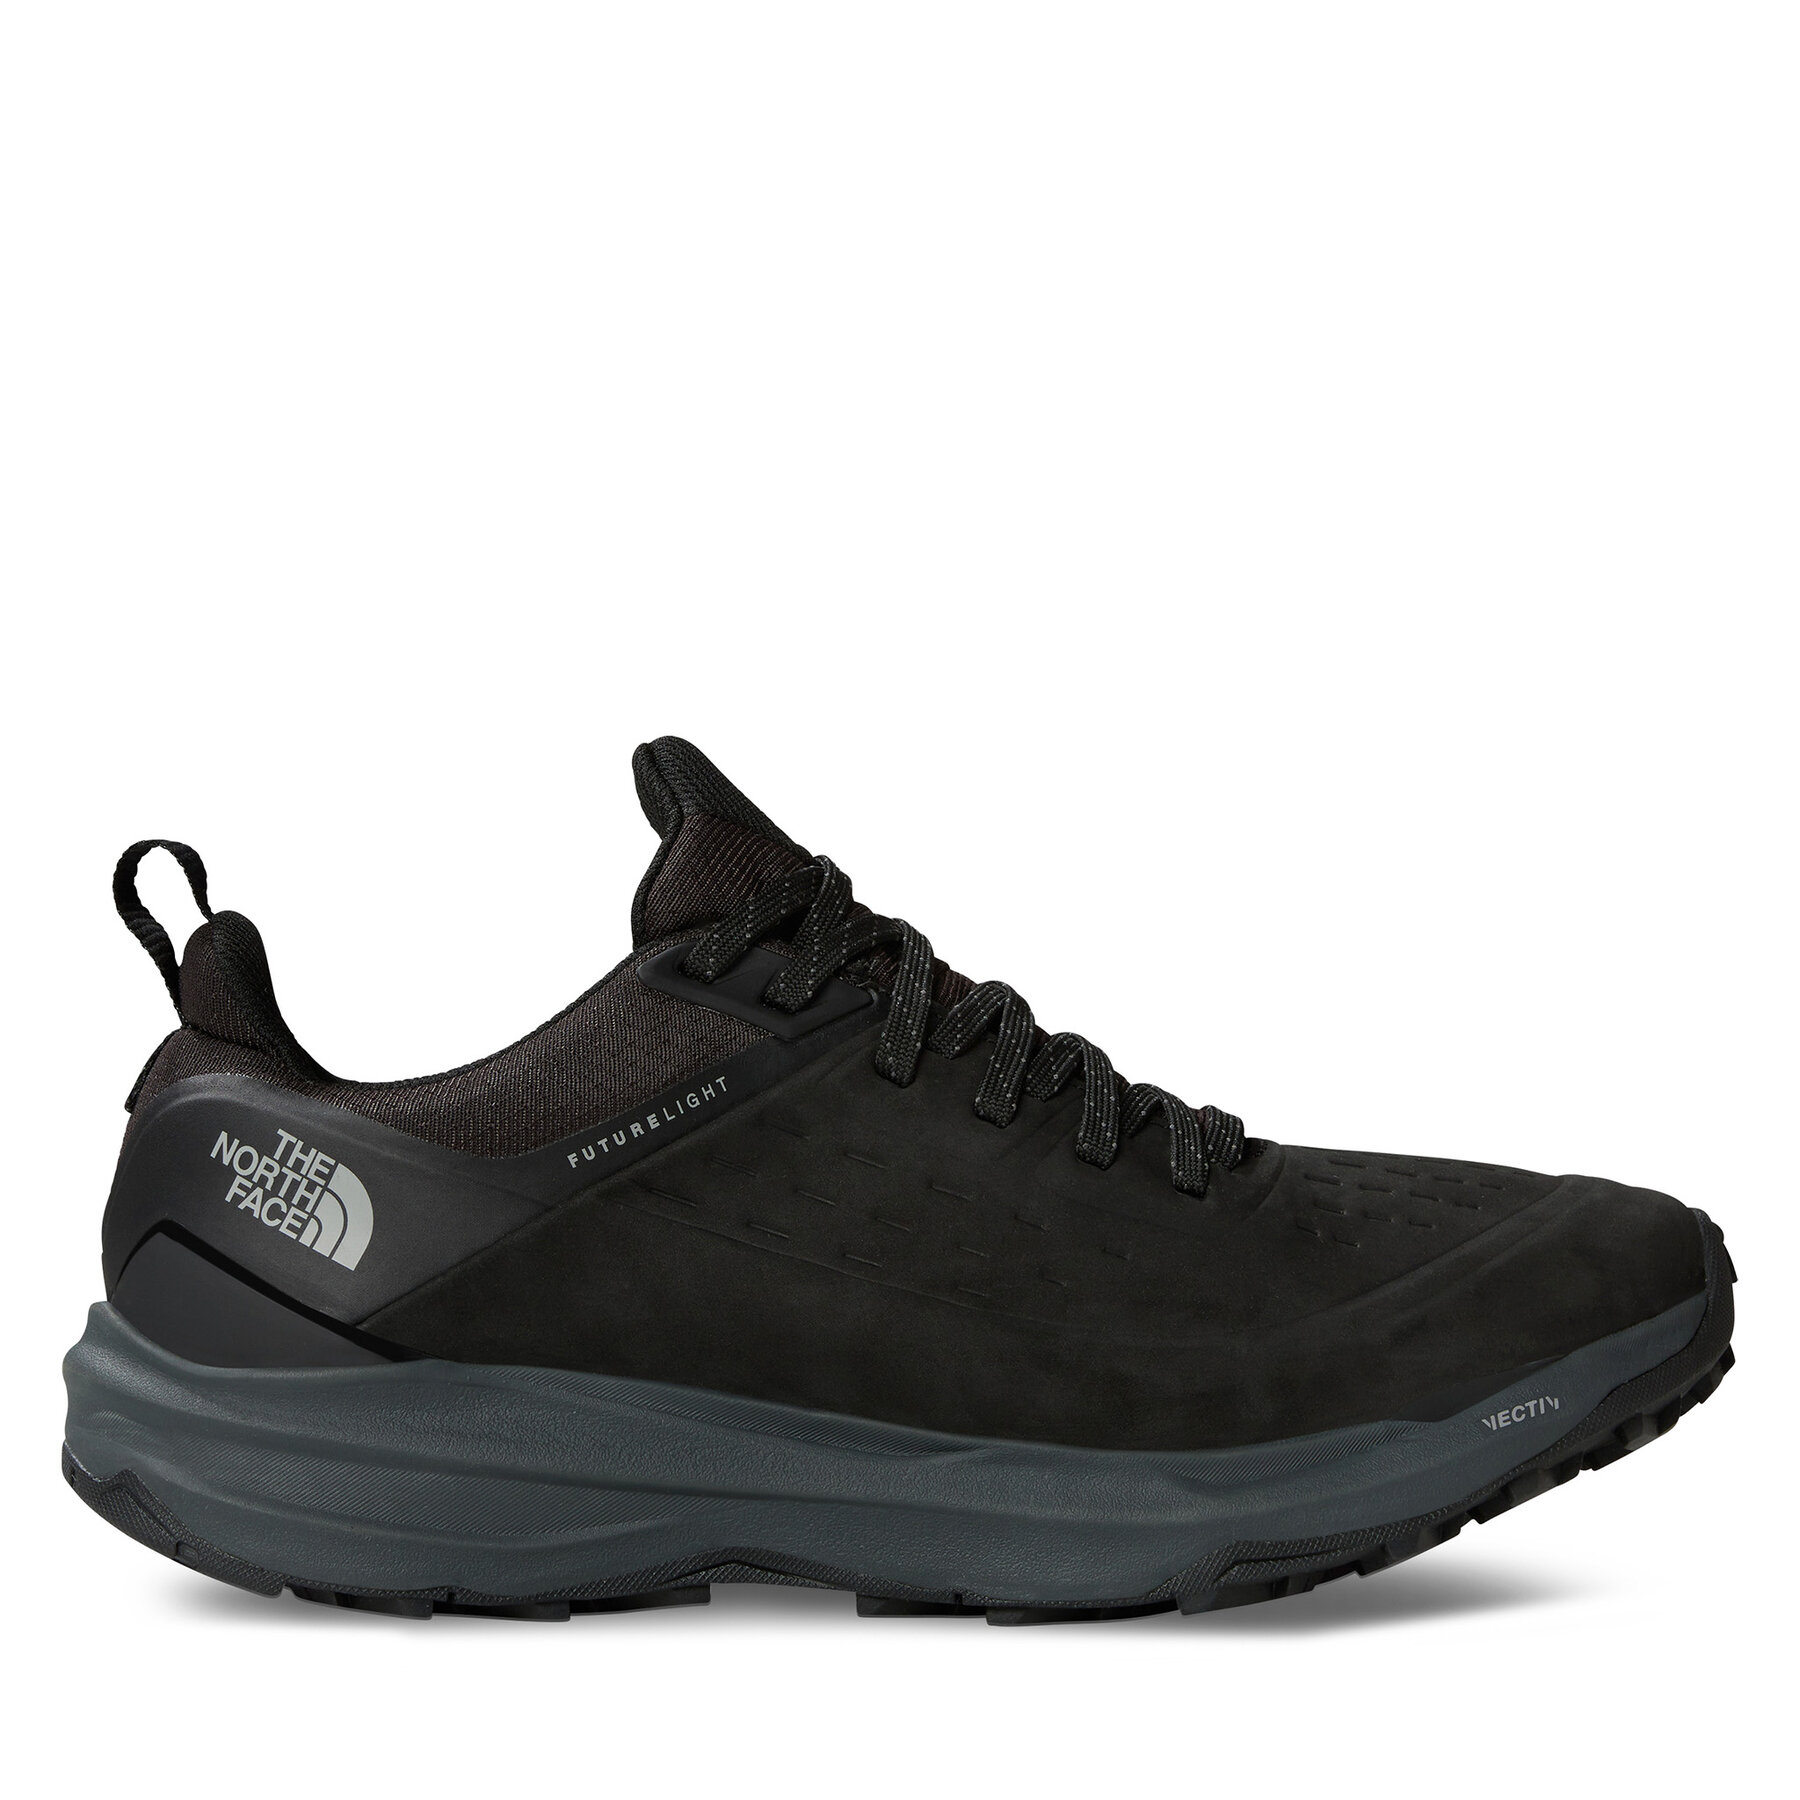 Comprar en oferta The North Face Vectiv Exploris II Leather Hiking Shoes TNF black/grey